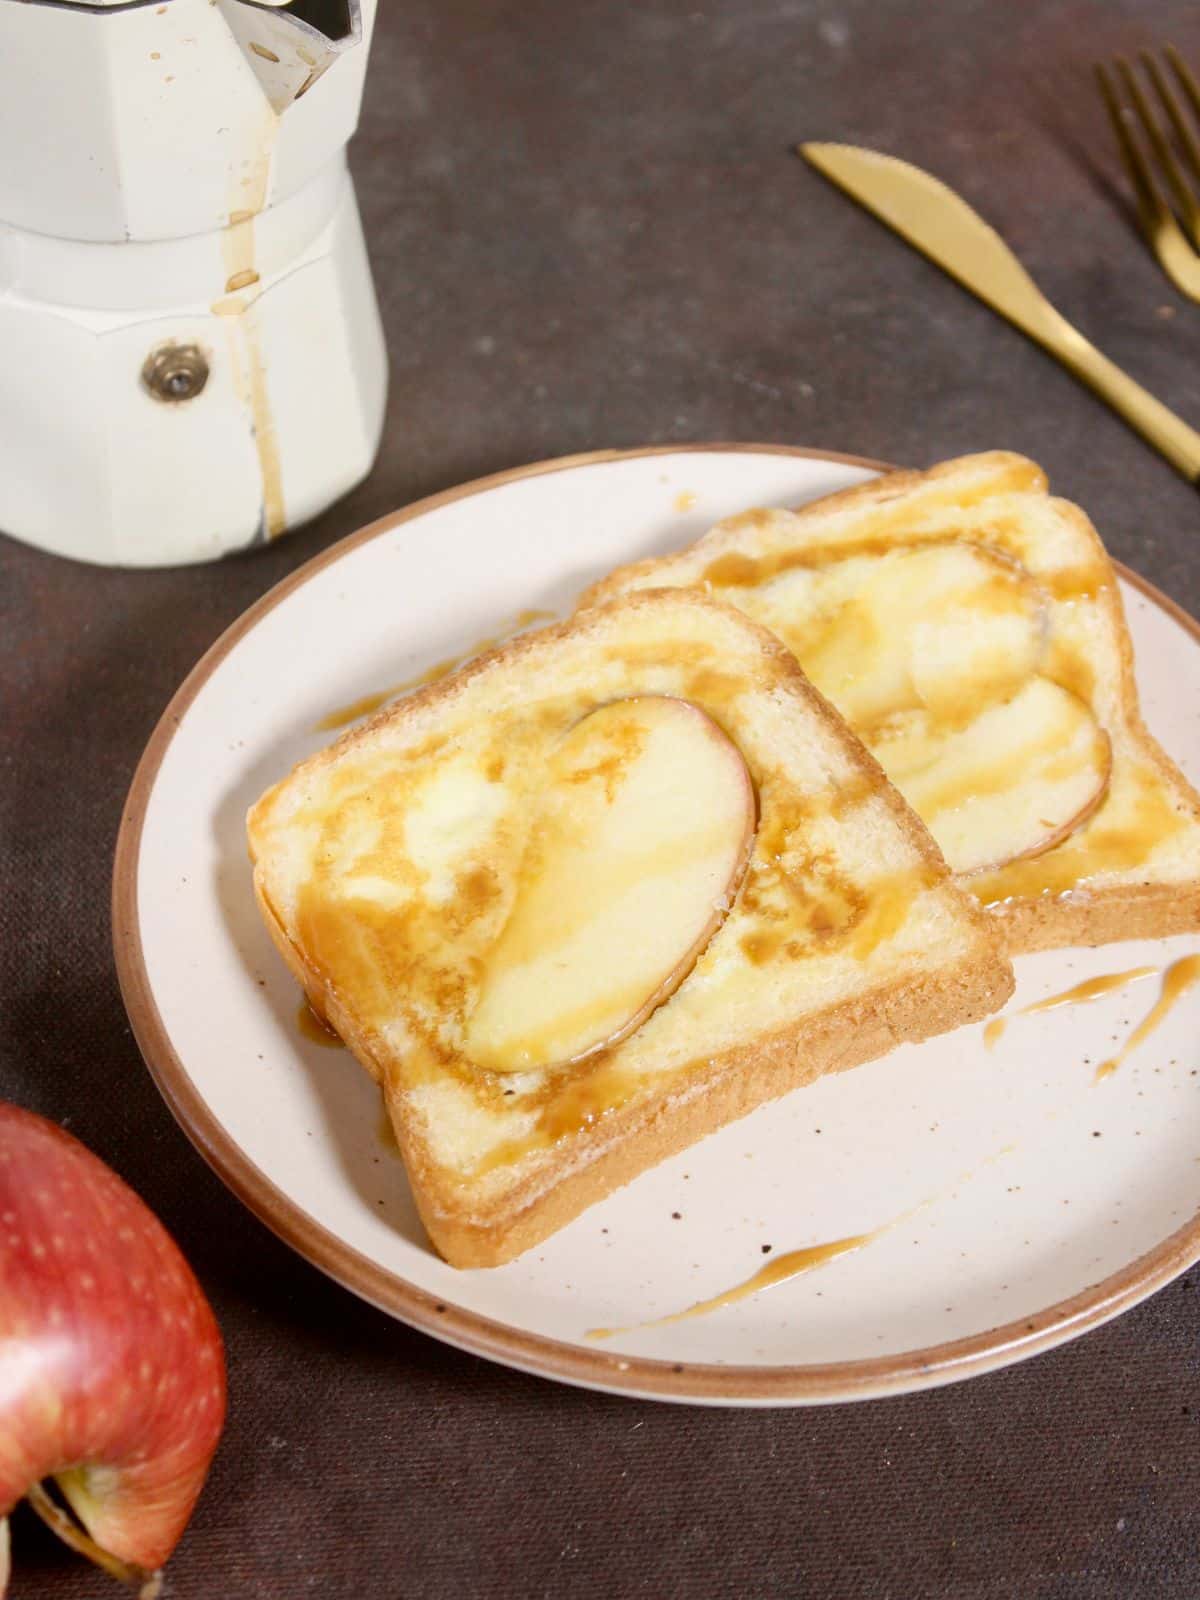 yummy French toast with apple twist